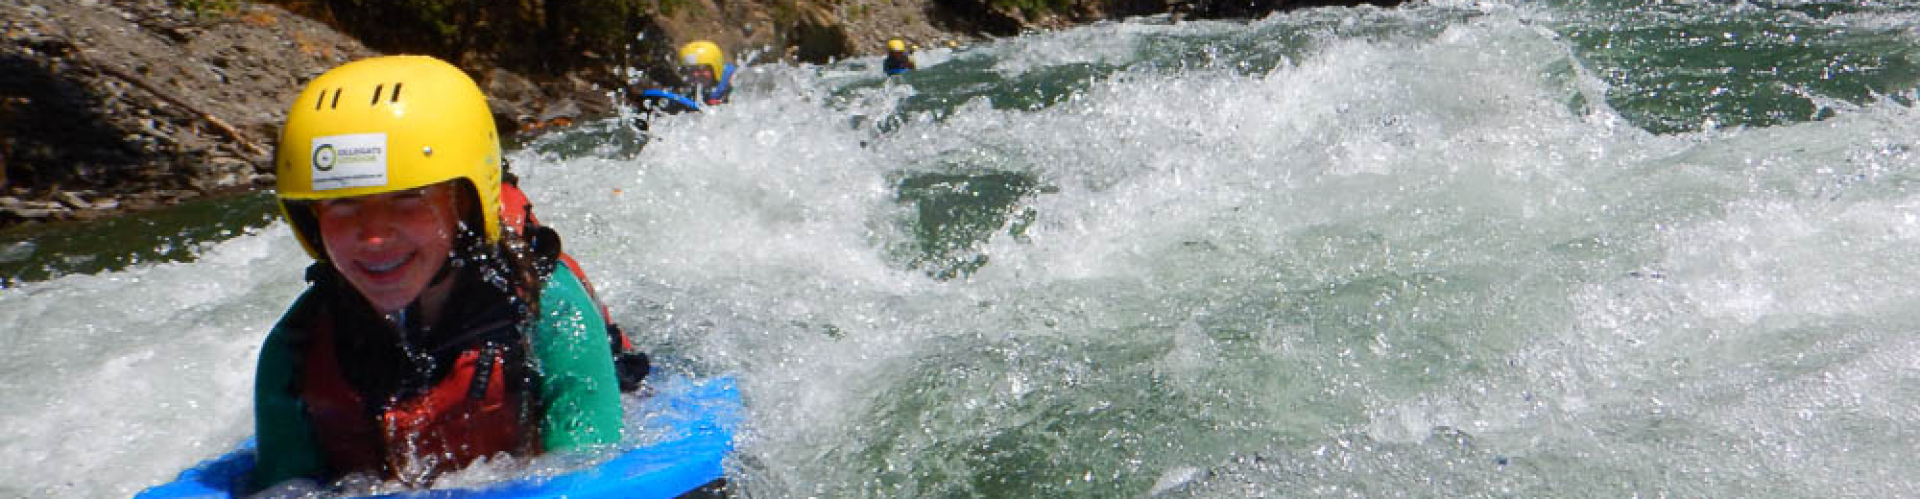 hydrospeed rivier collegats wild water spanje pyreneeen gezinsvakantie multi-actief